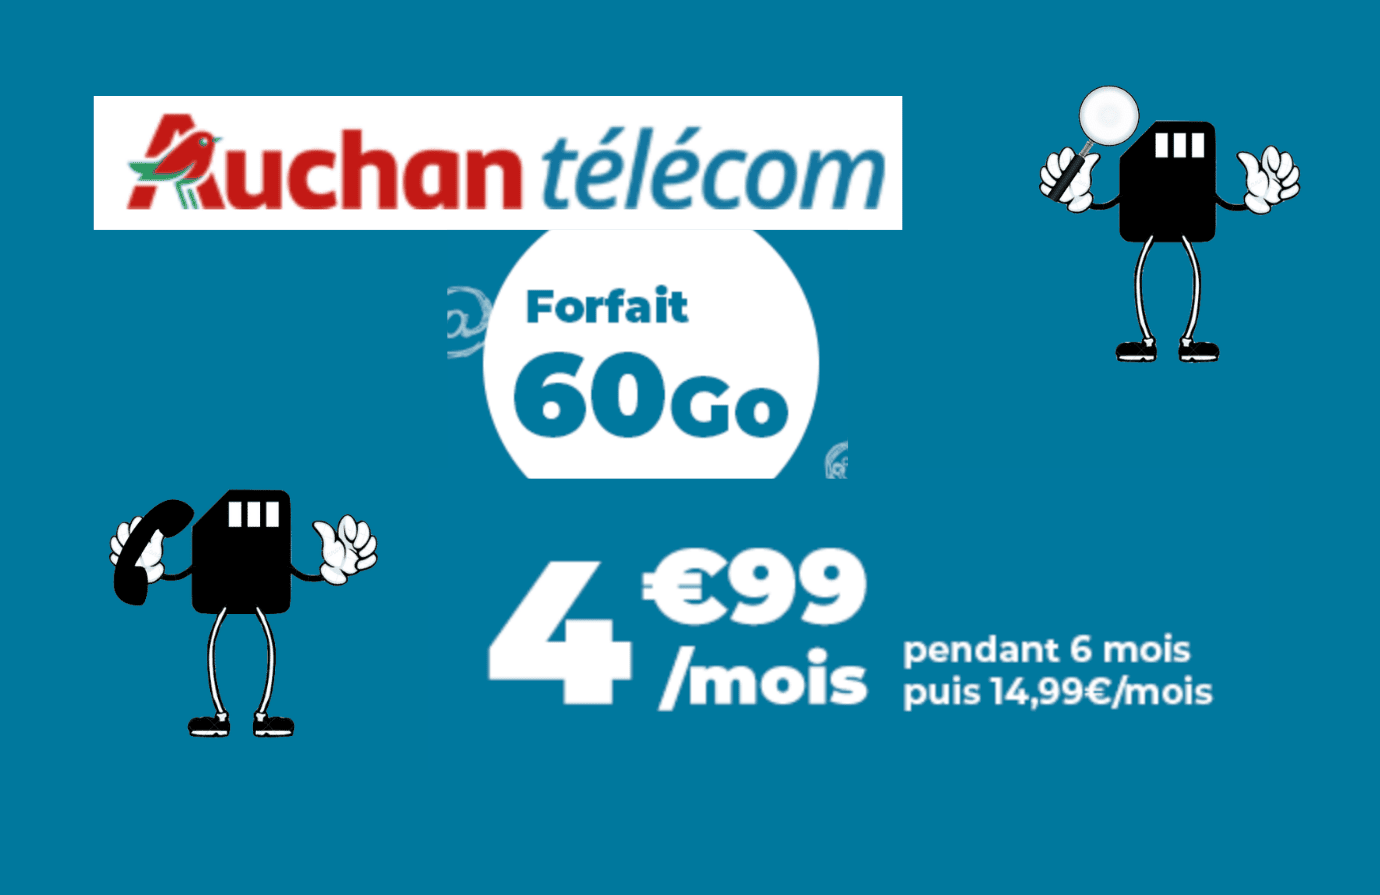 Auchan Telecom